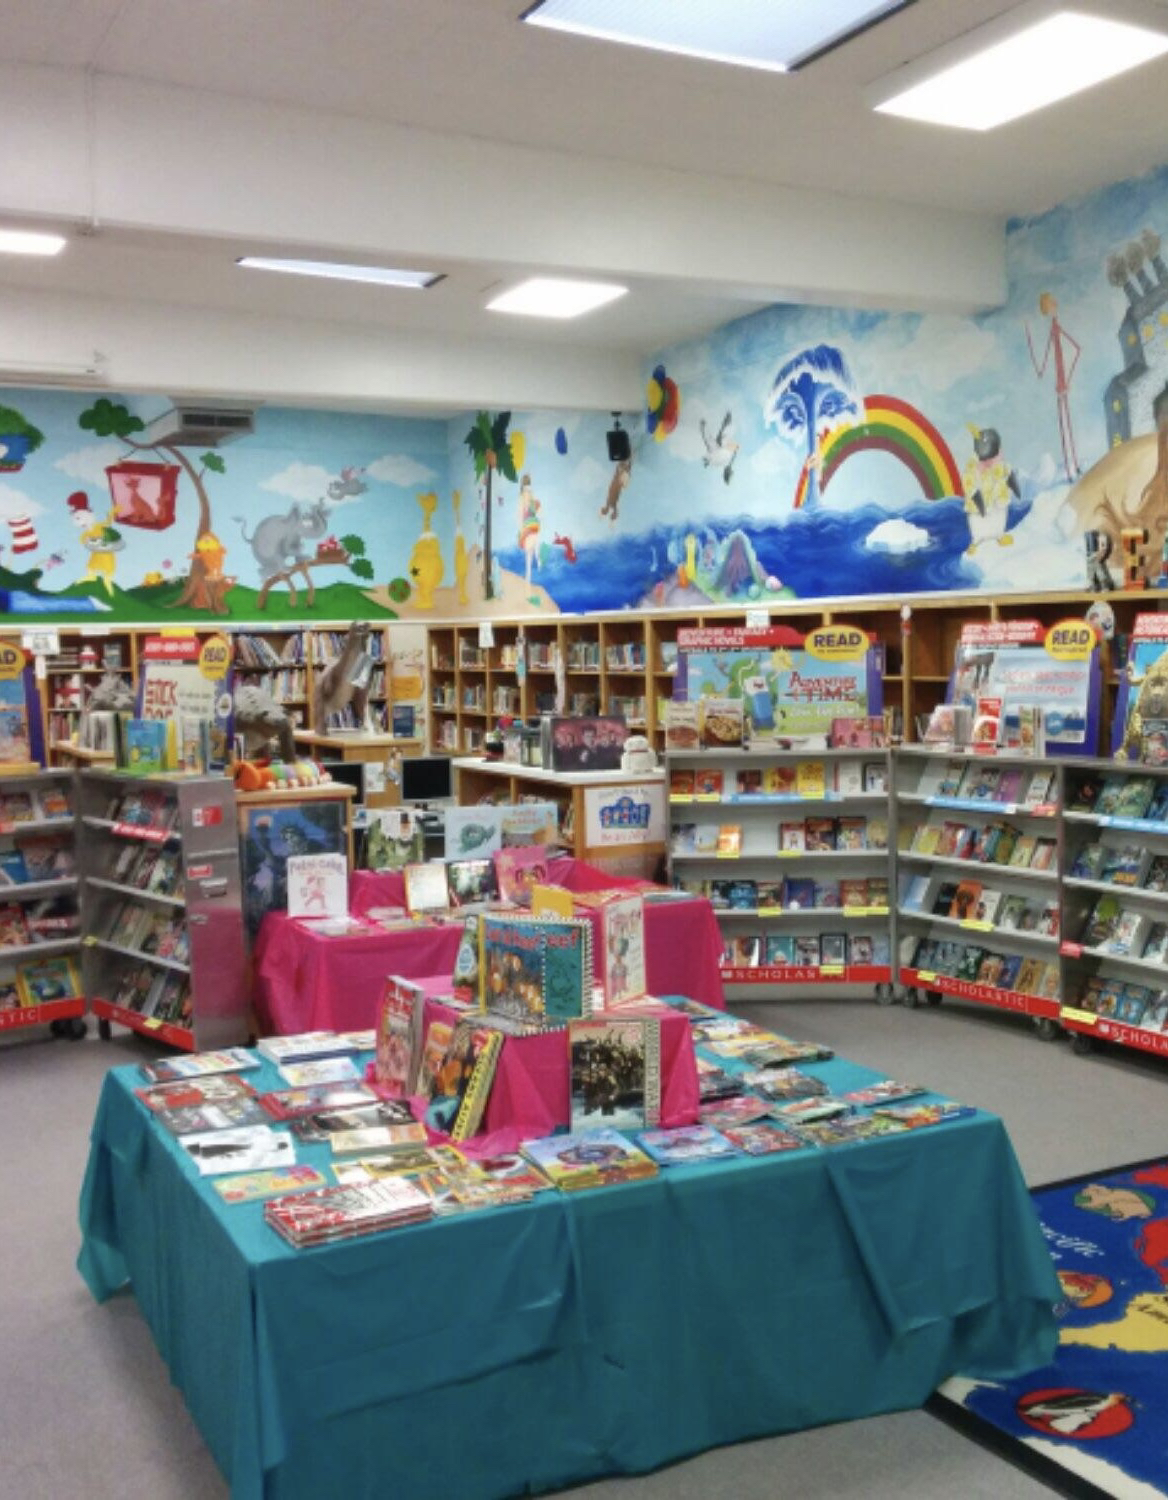 Scholastic Book Fair — HOME